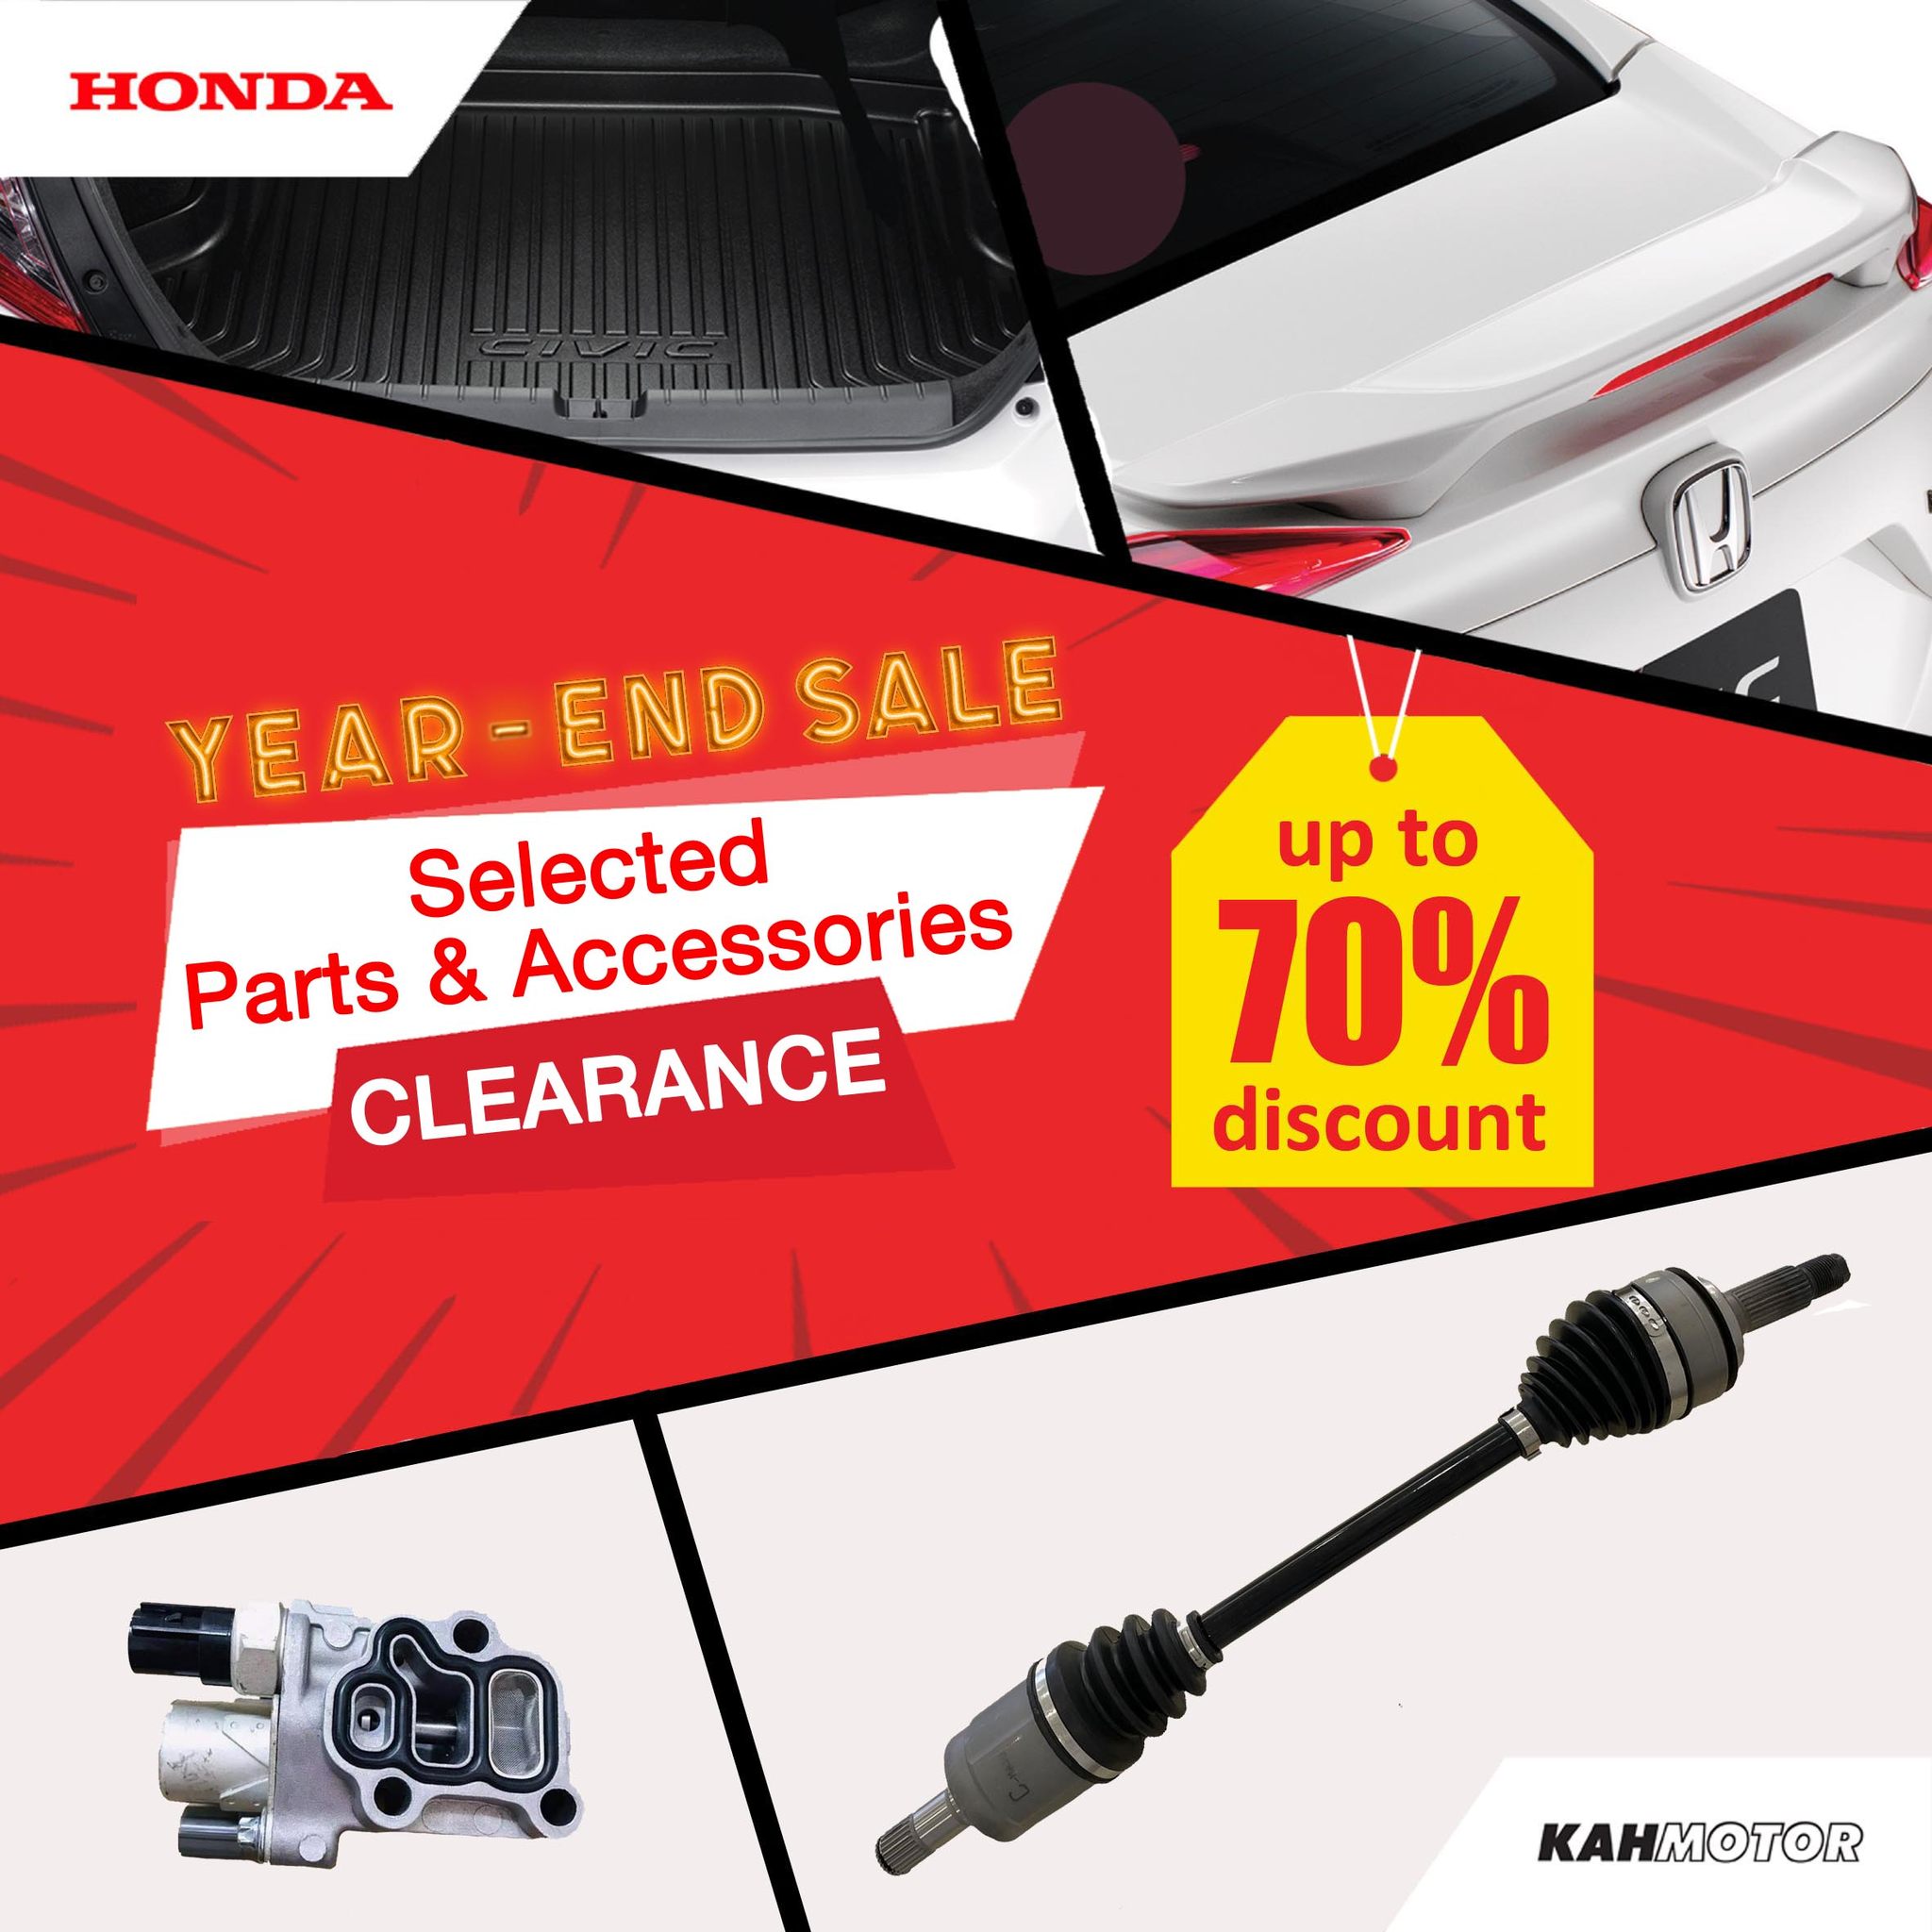 14 Oct 2022 Onward Honda YearEnd Sale